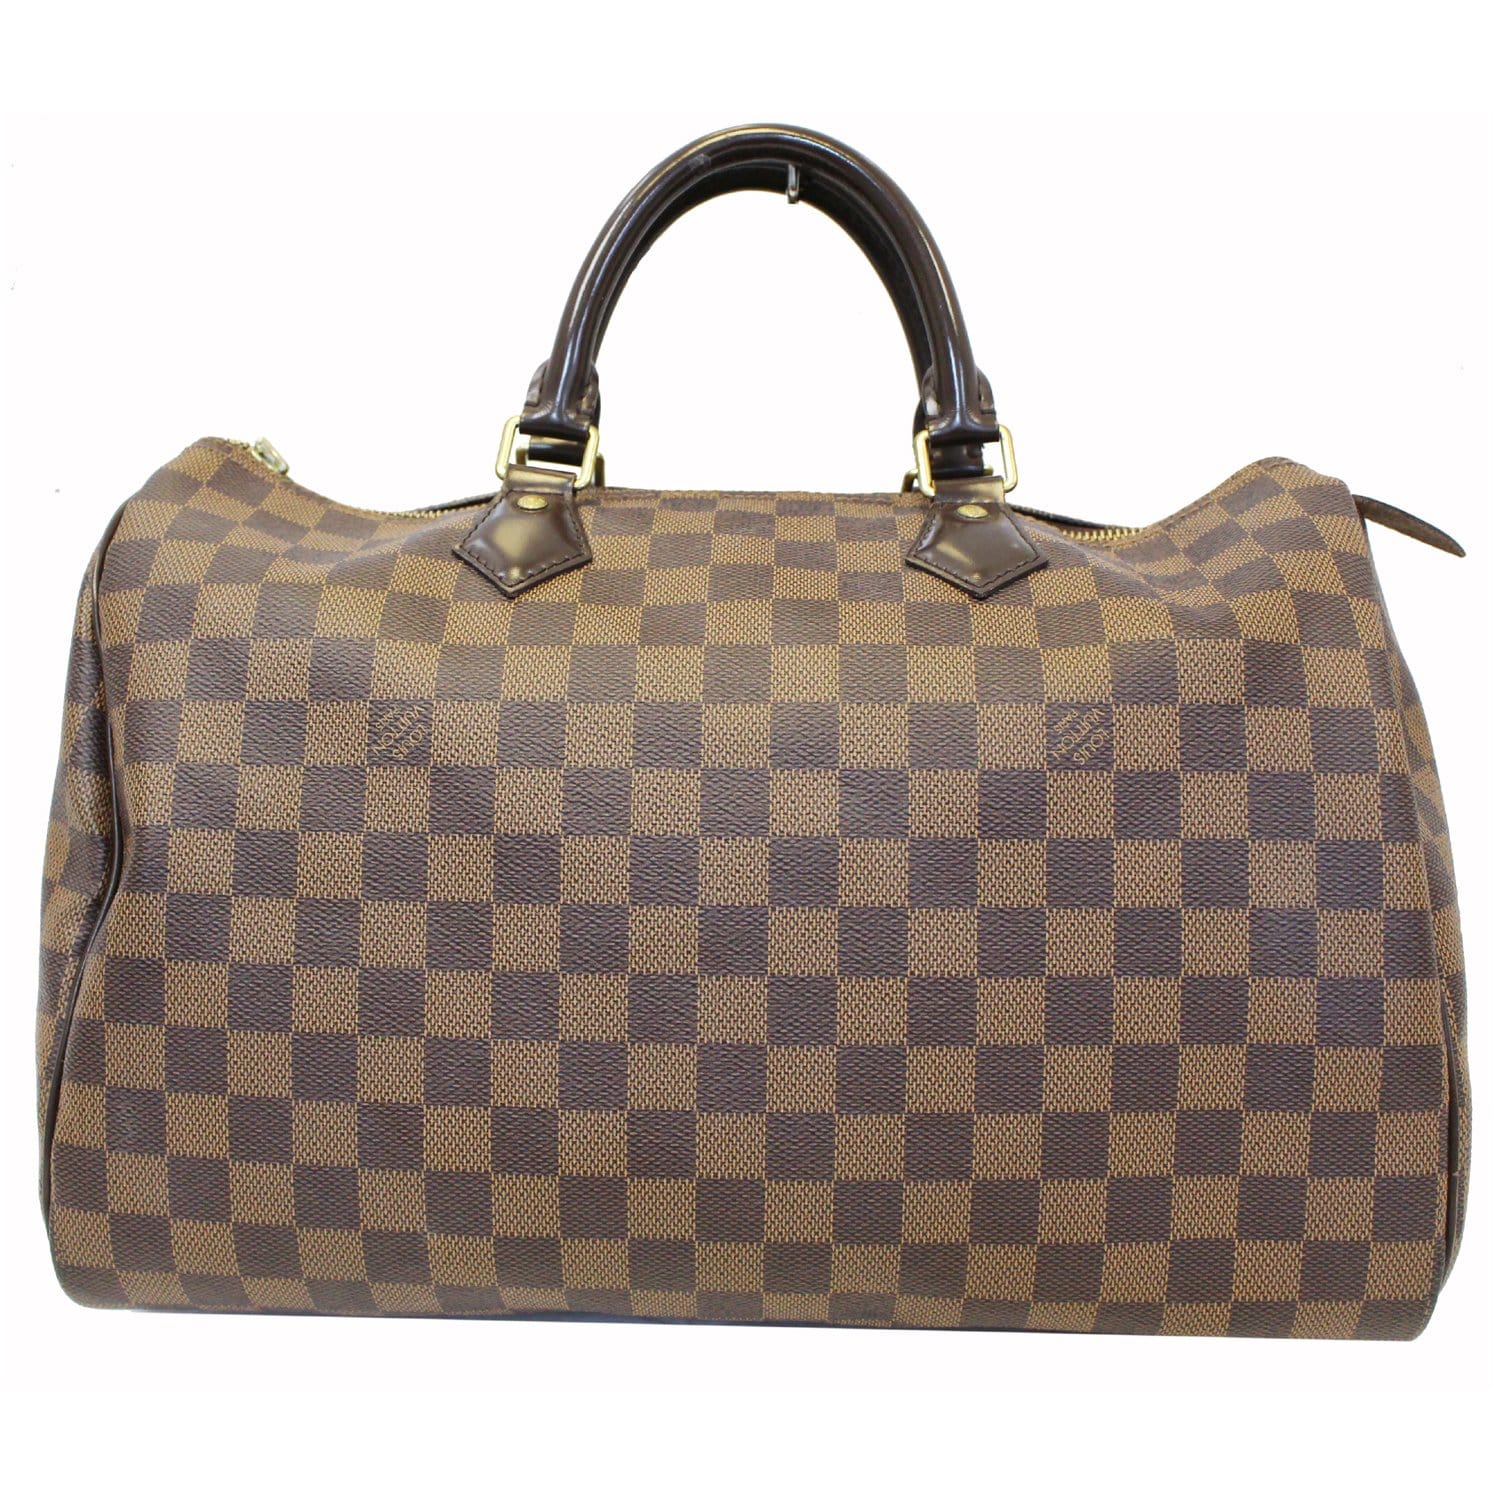 Speedy Louis Vuitton Handbag  Buy or Sell your LV handbags